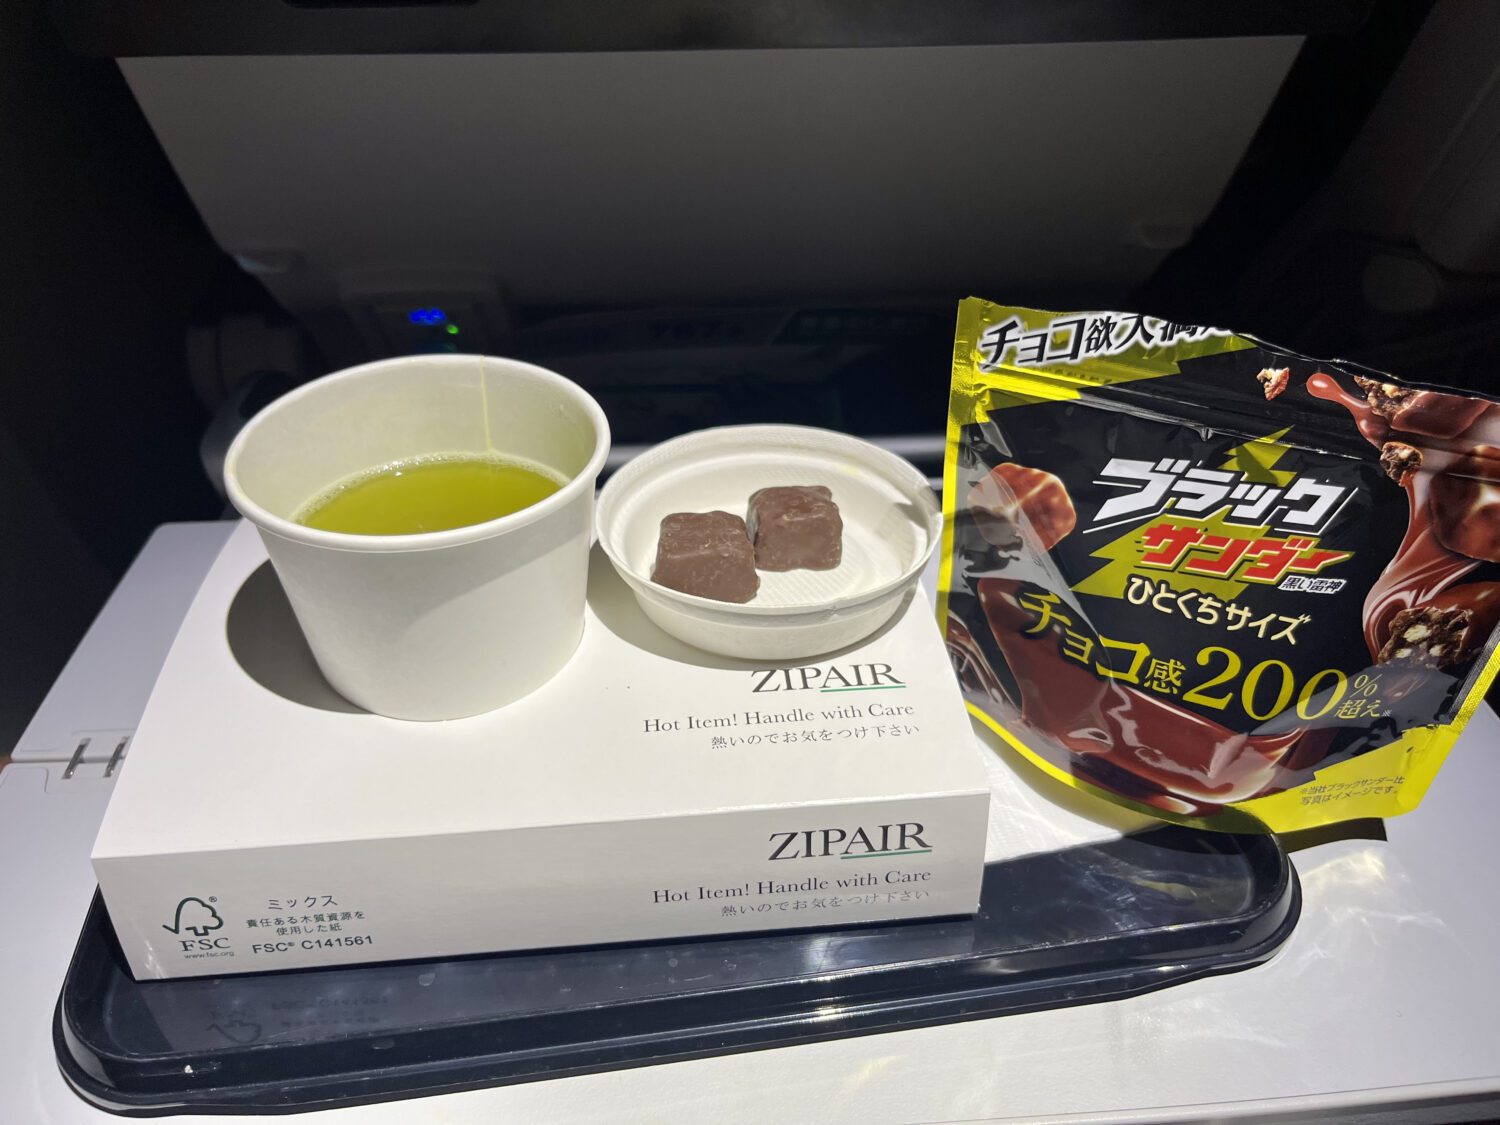 Zipair green tea and chocolate